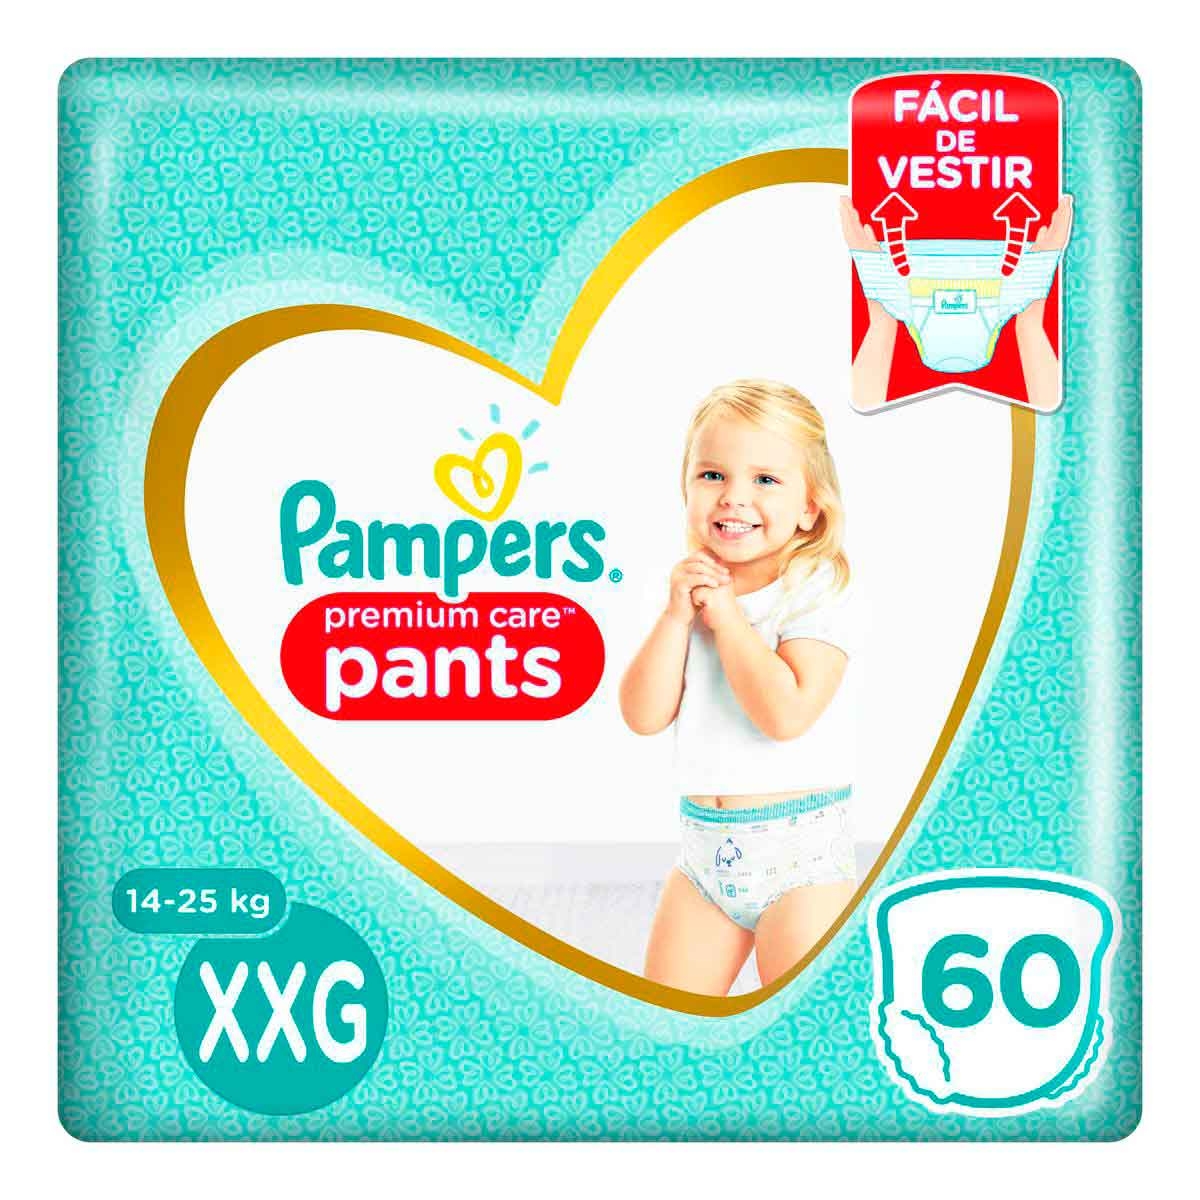 Fralda Pampers Premium Care Pants XXG com 60 unidades 60 Tiras